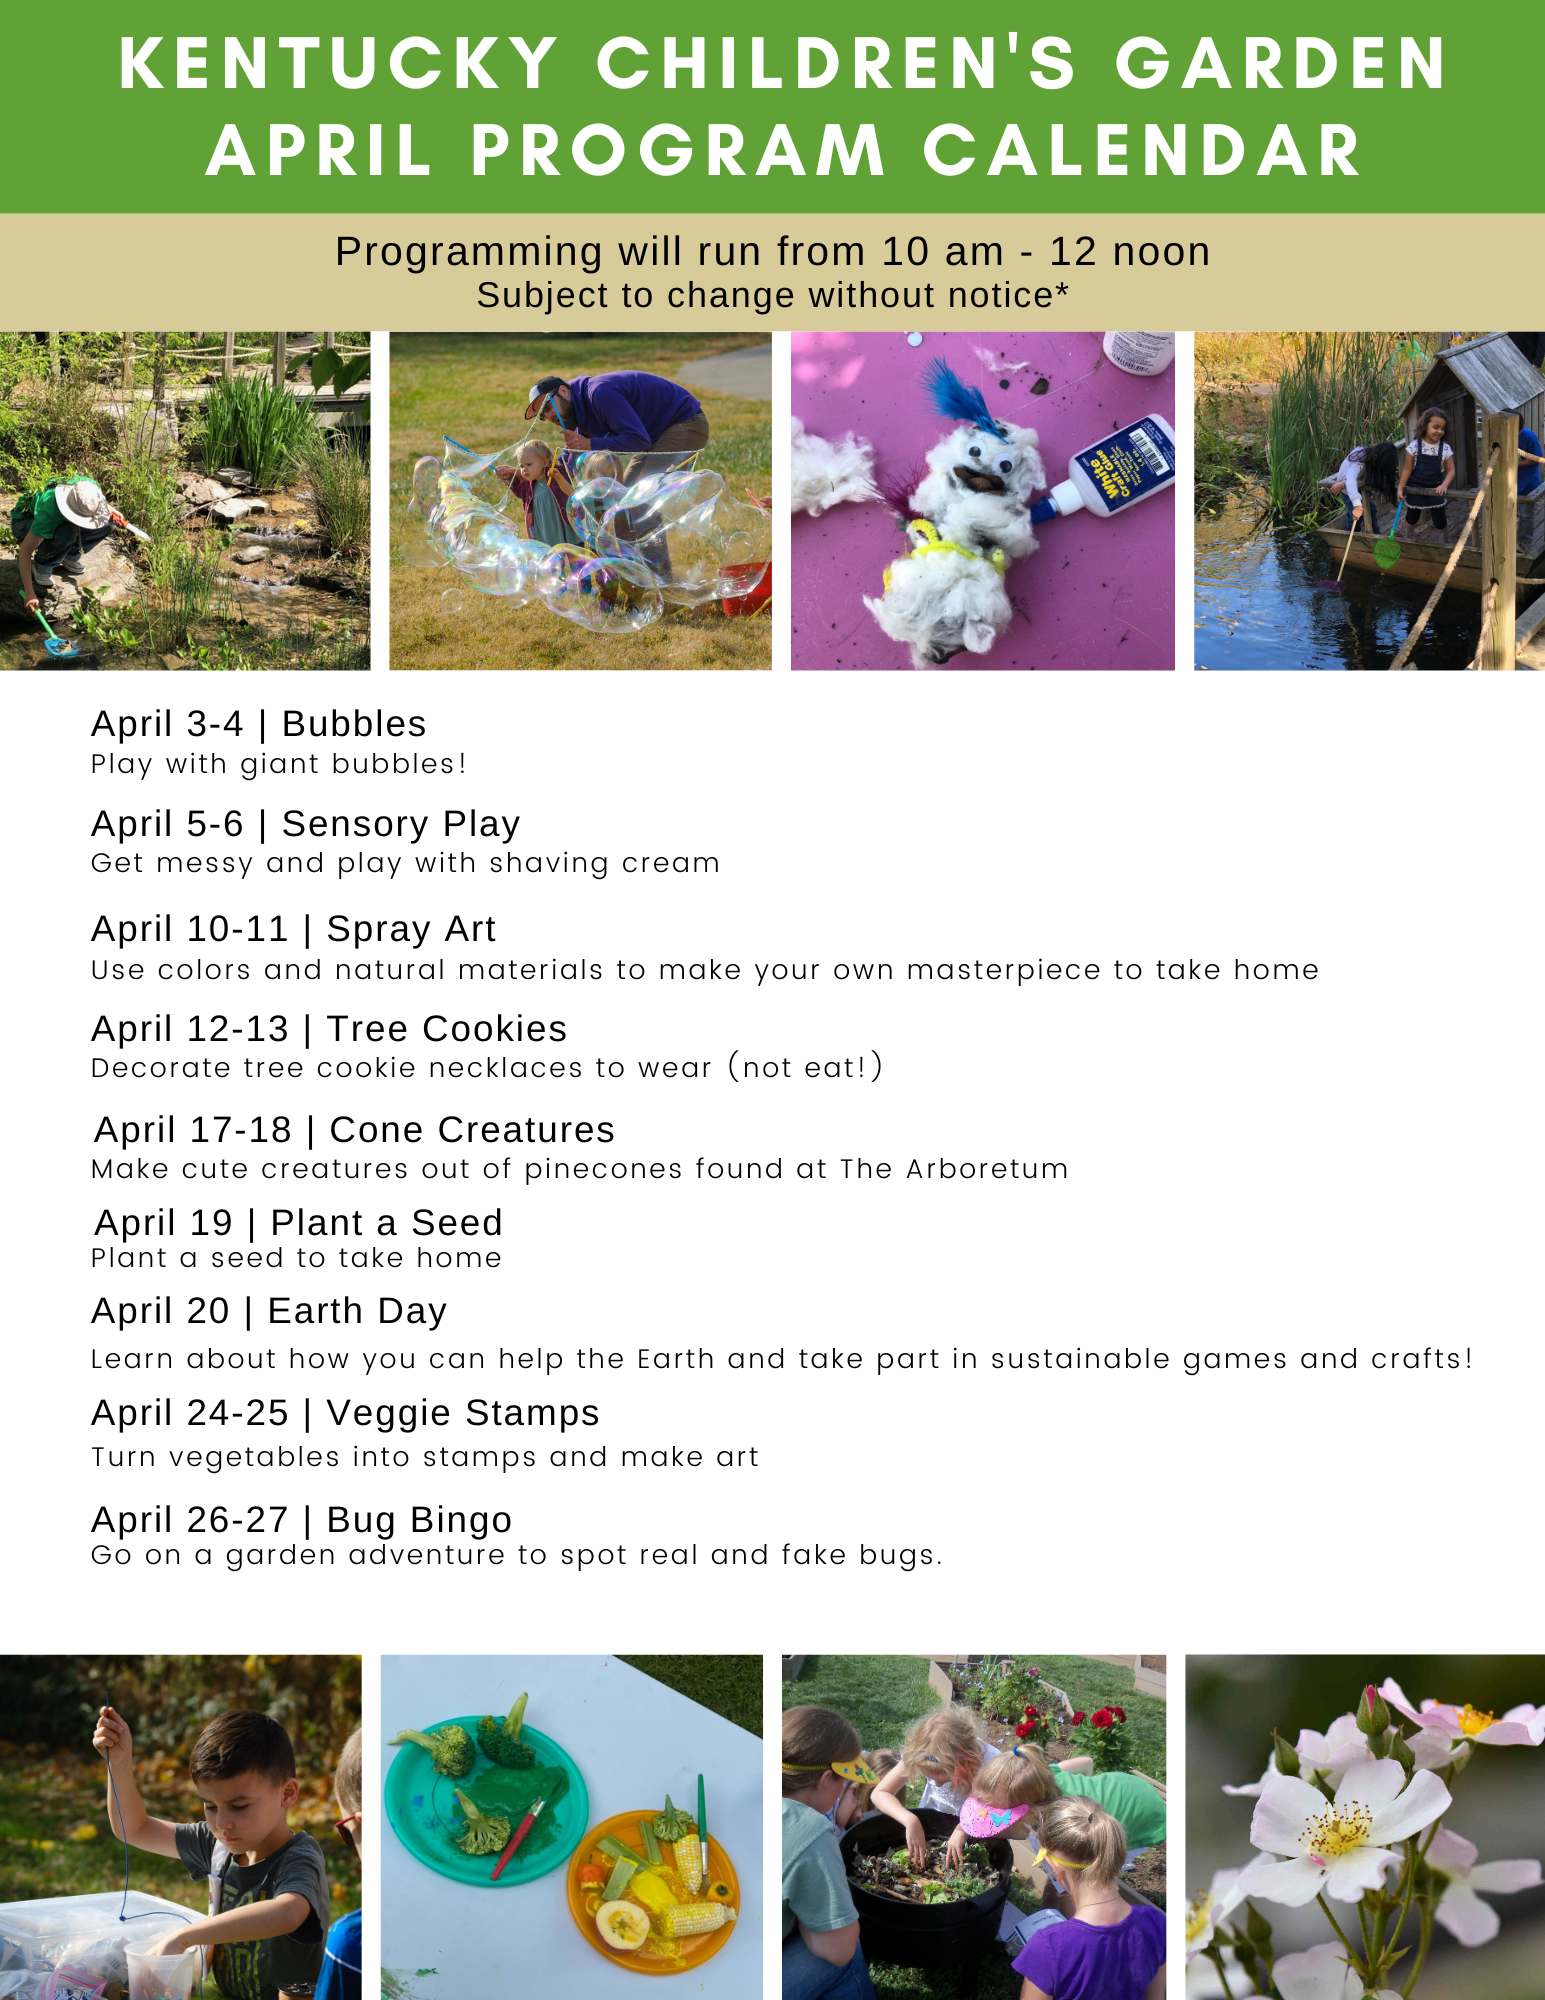 April Program Calendar for the Kentucky Children's Garden